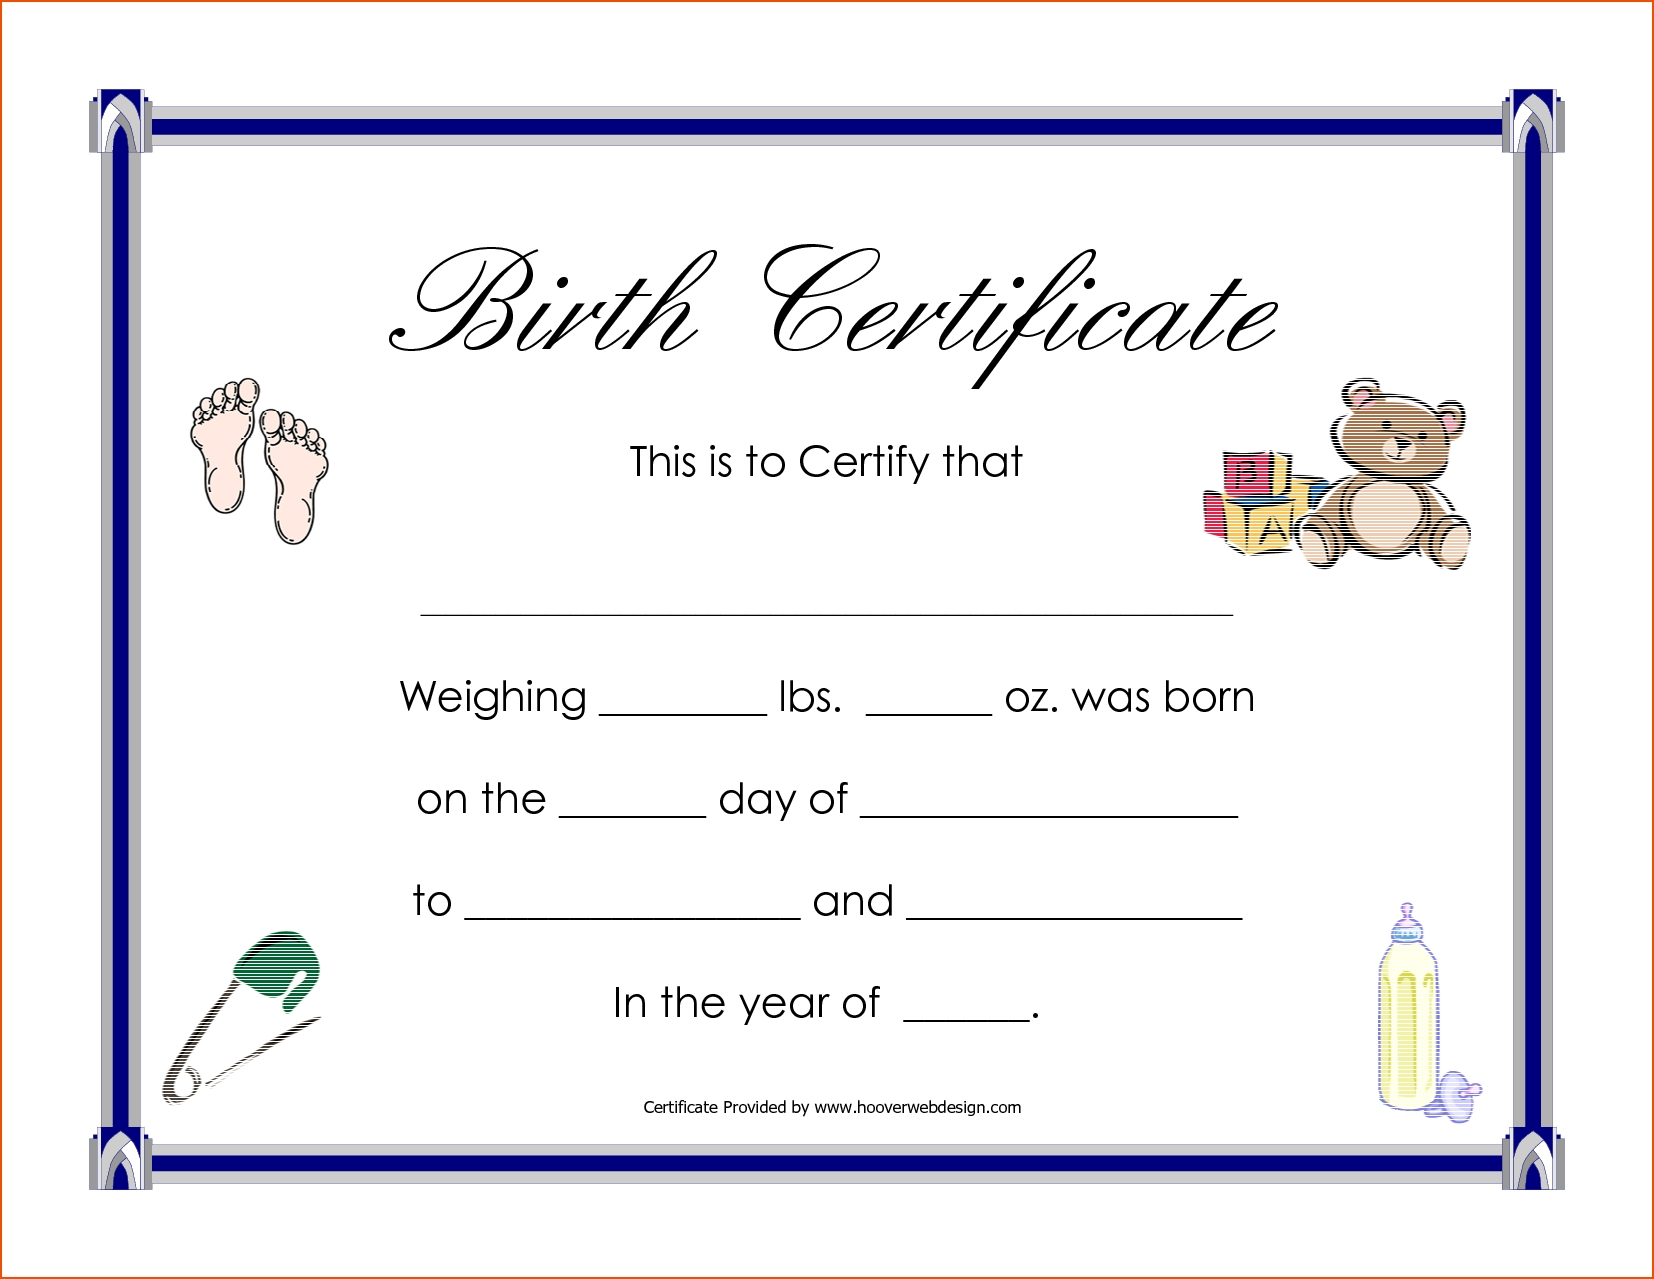 A Birth Certificate Template | Safebest.xyz Pertaining To Birth Certificate Templates For Word